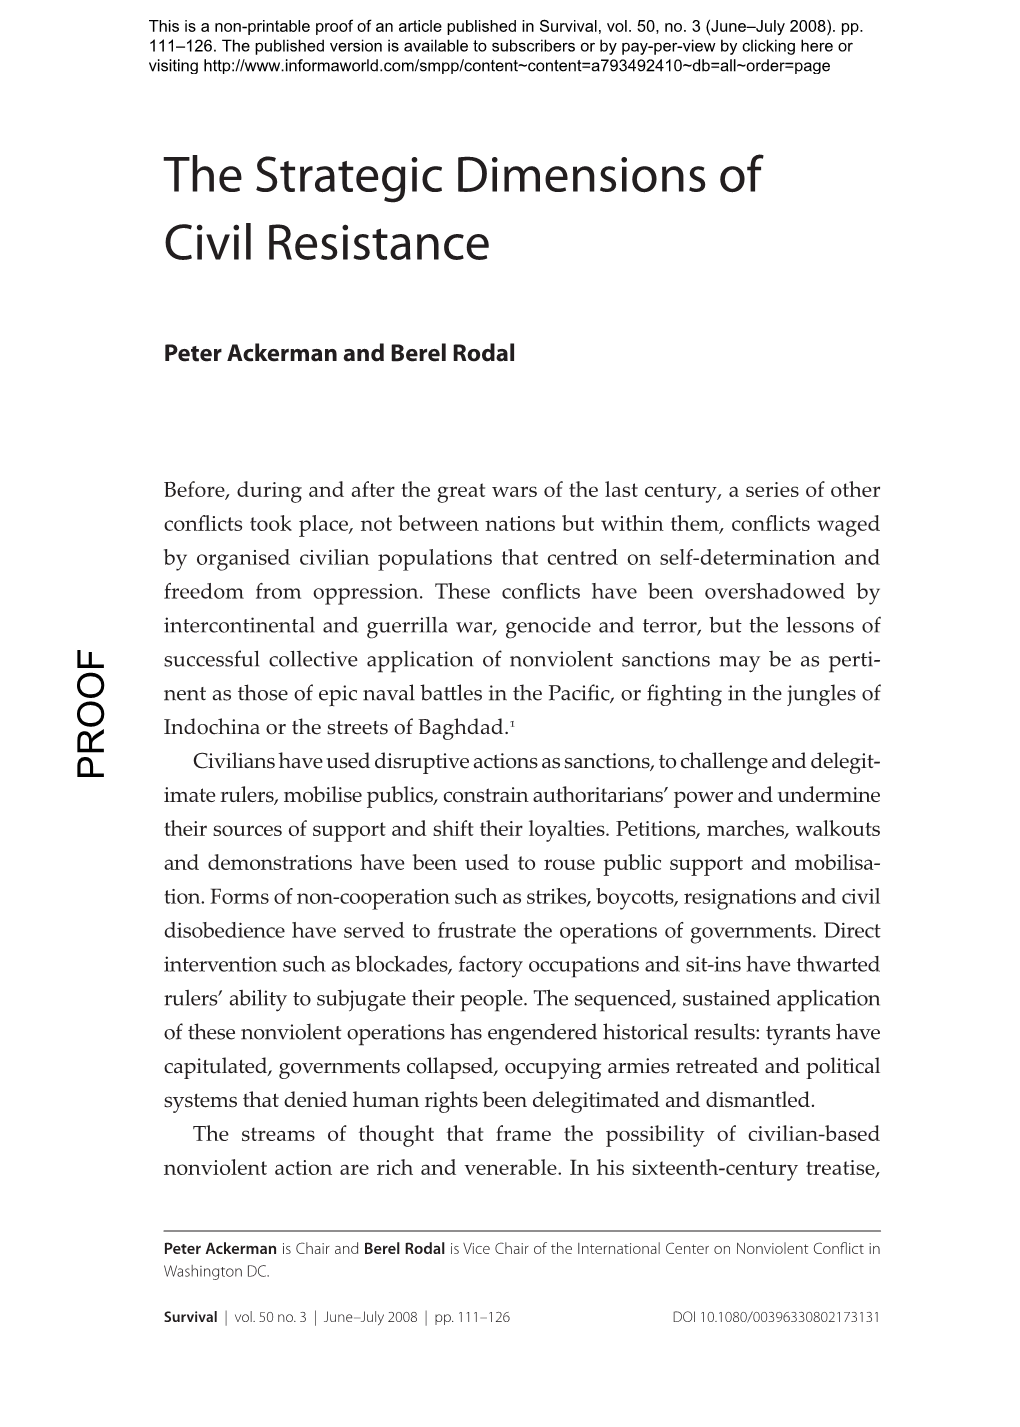 The Strategic Dimensions of Civil Resistance